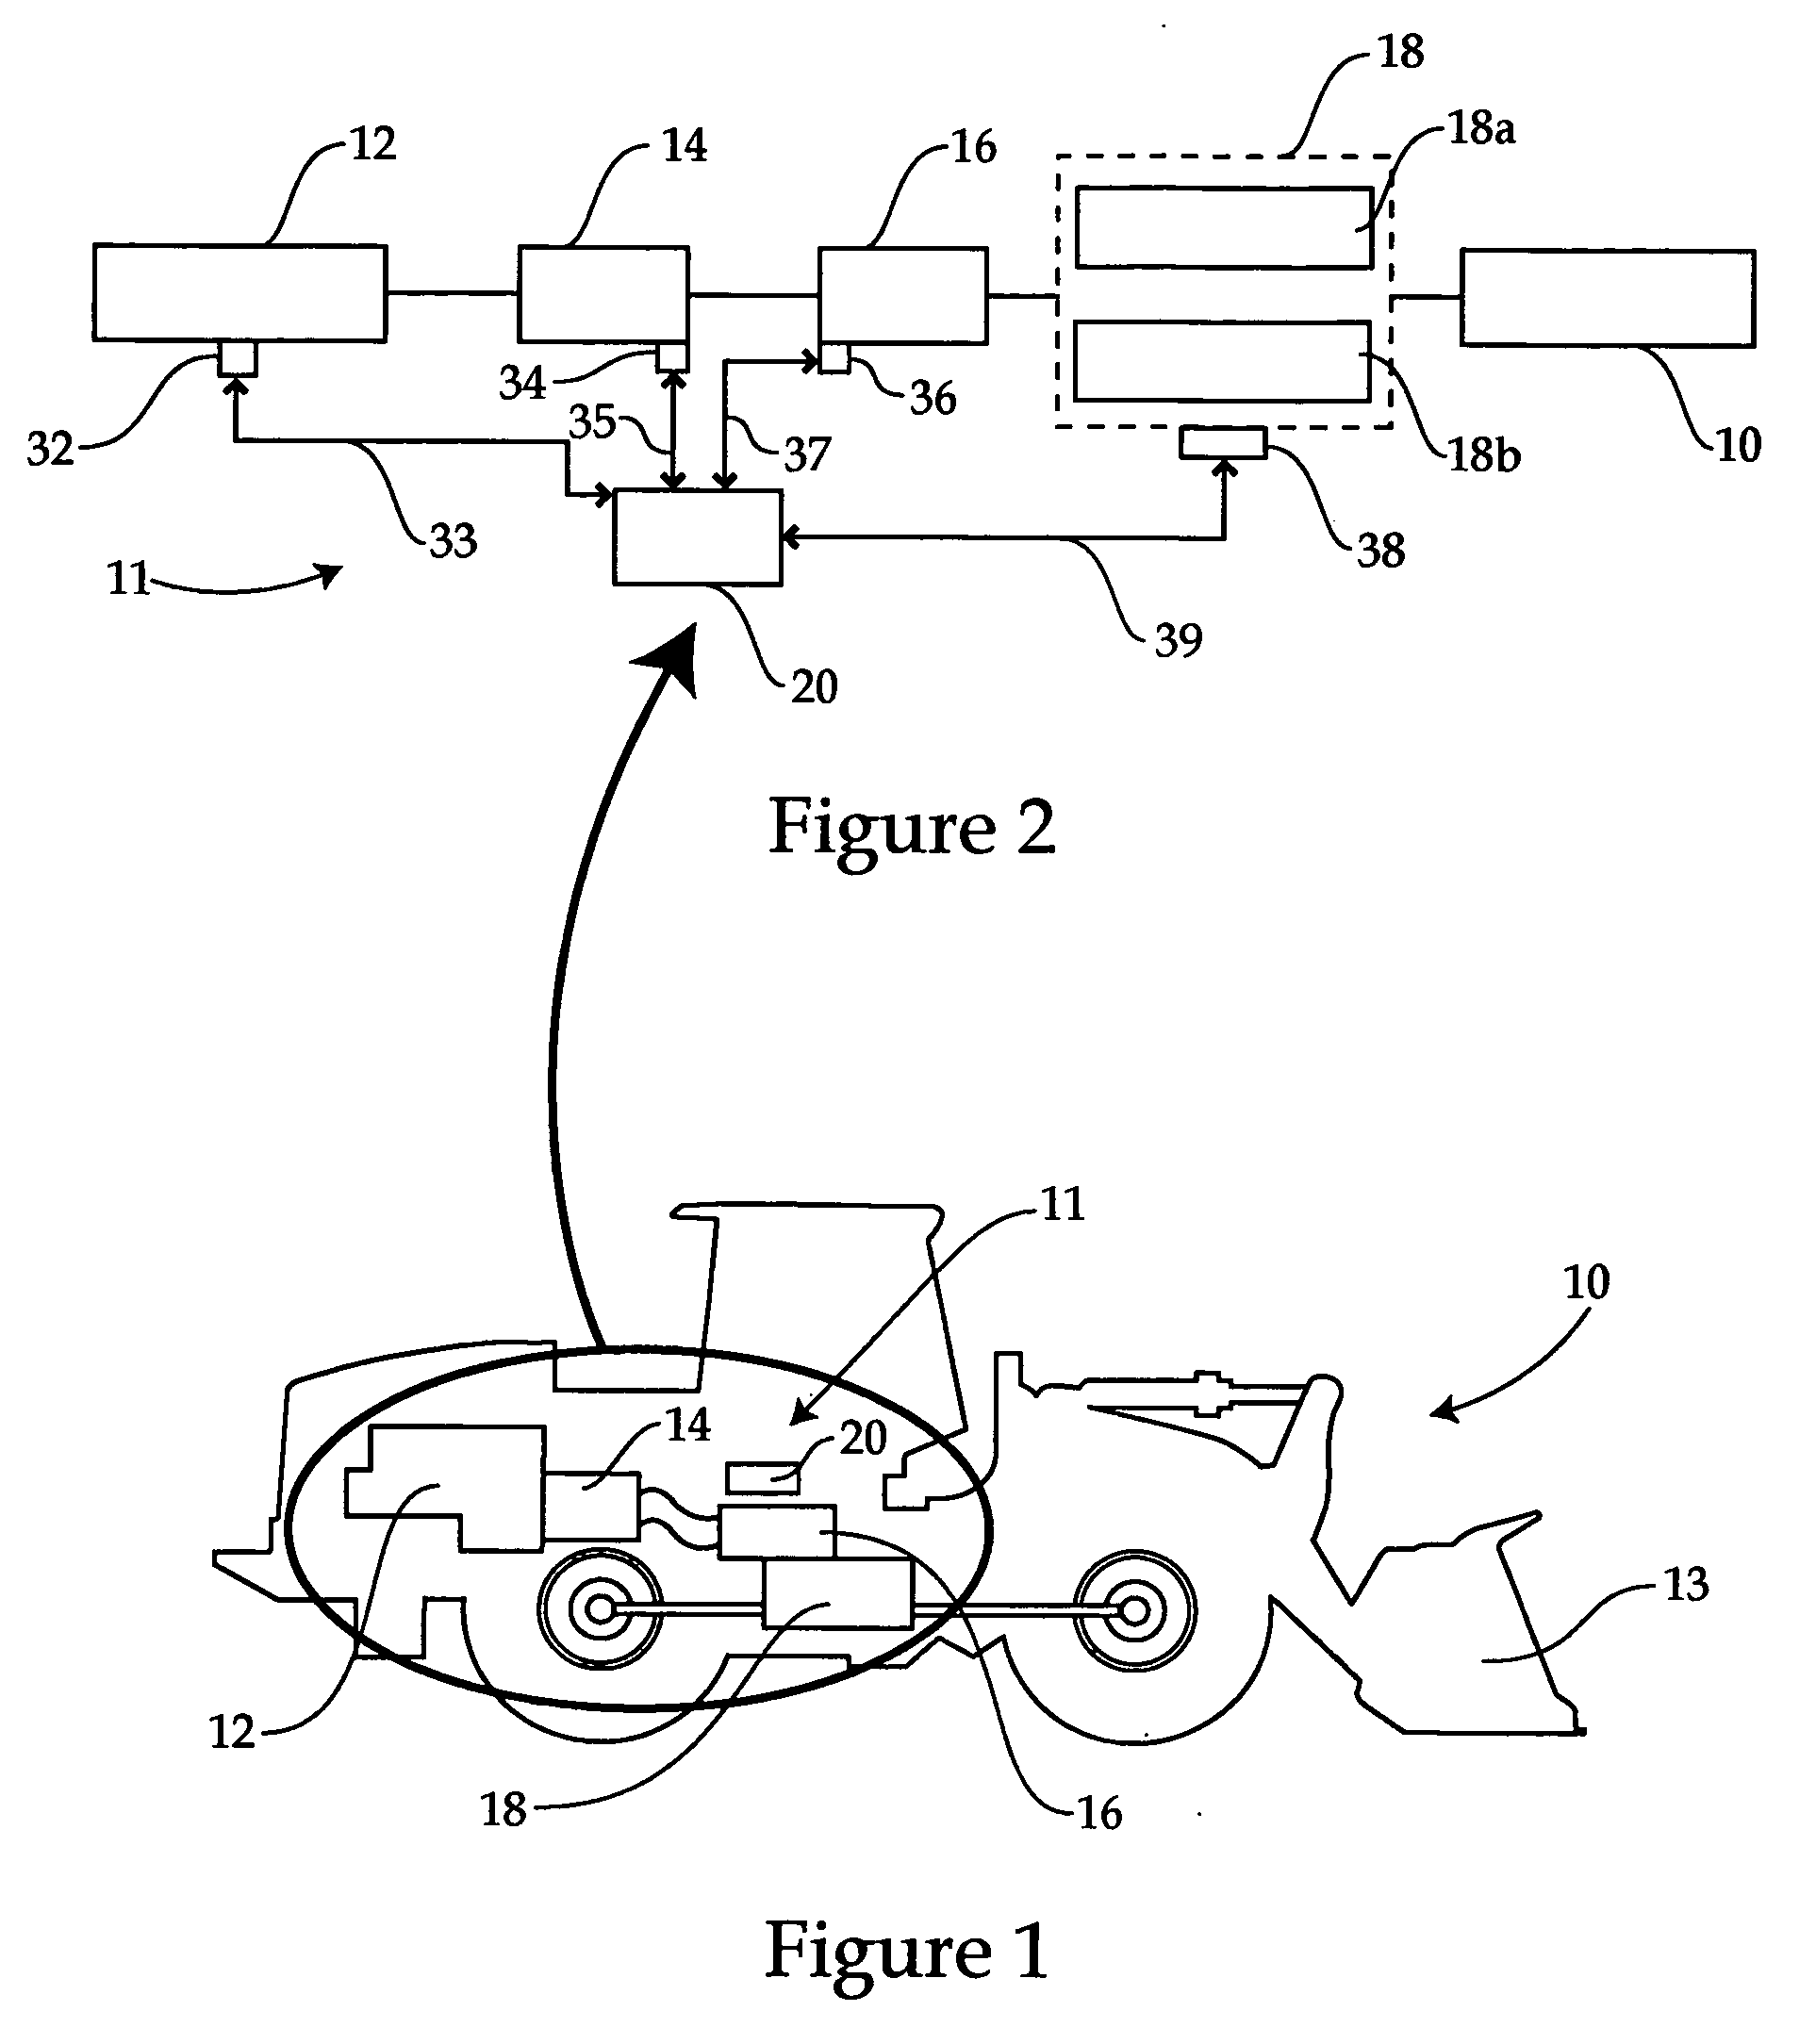 Method of slowing a hydrostatic drive work machine